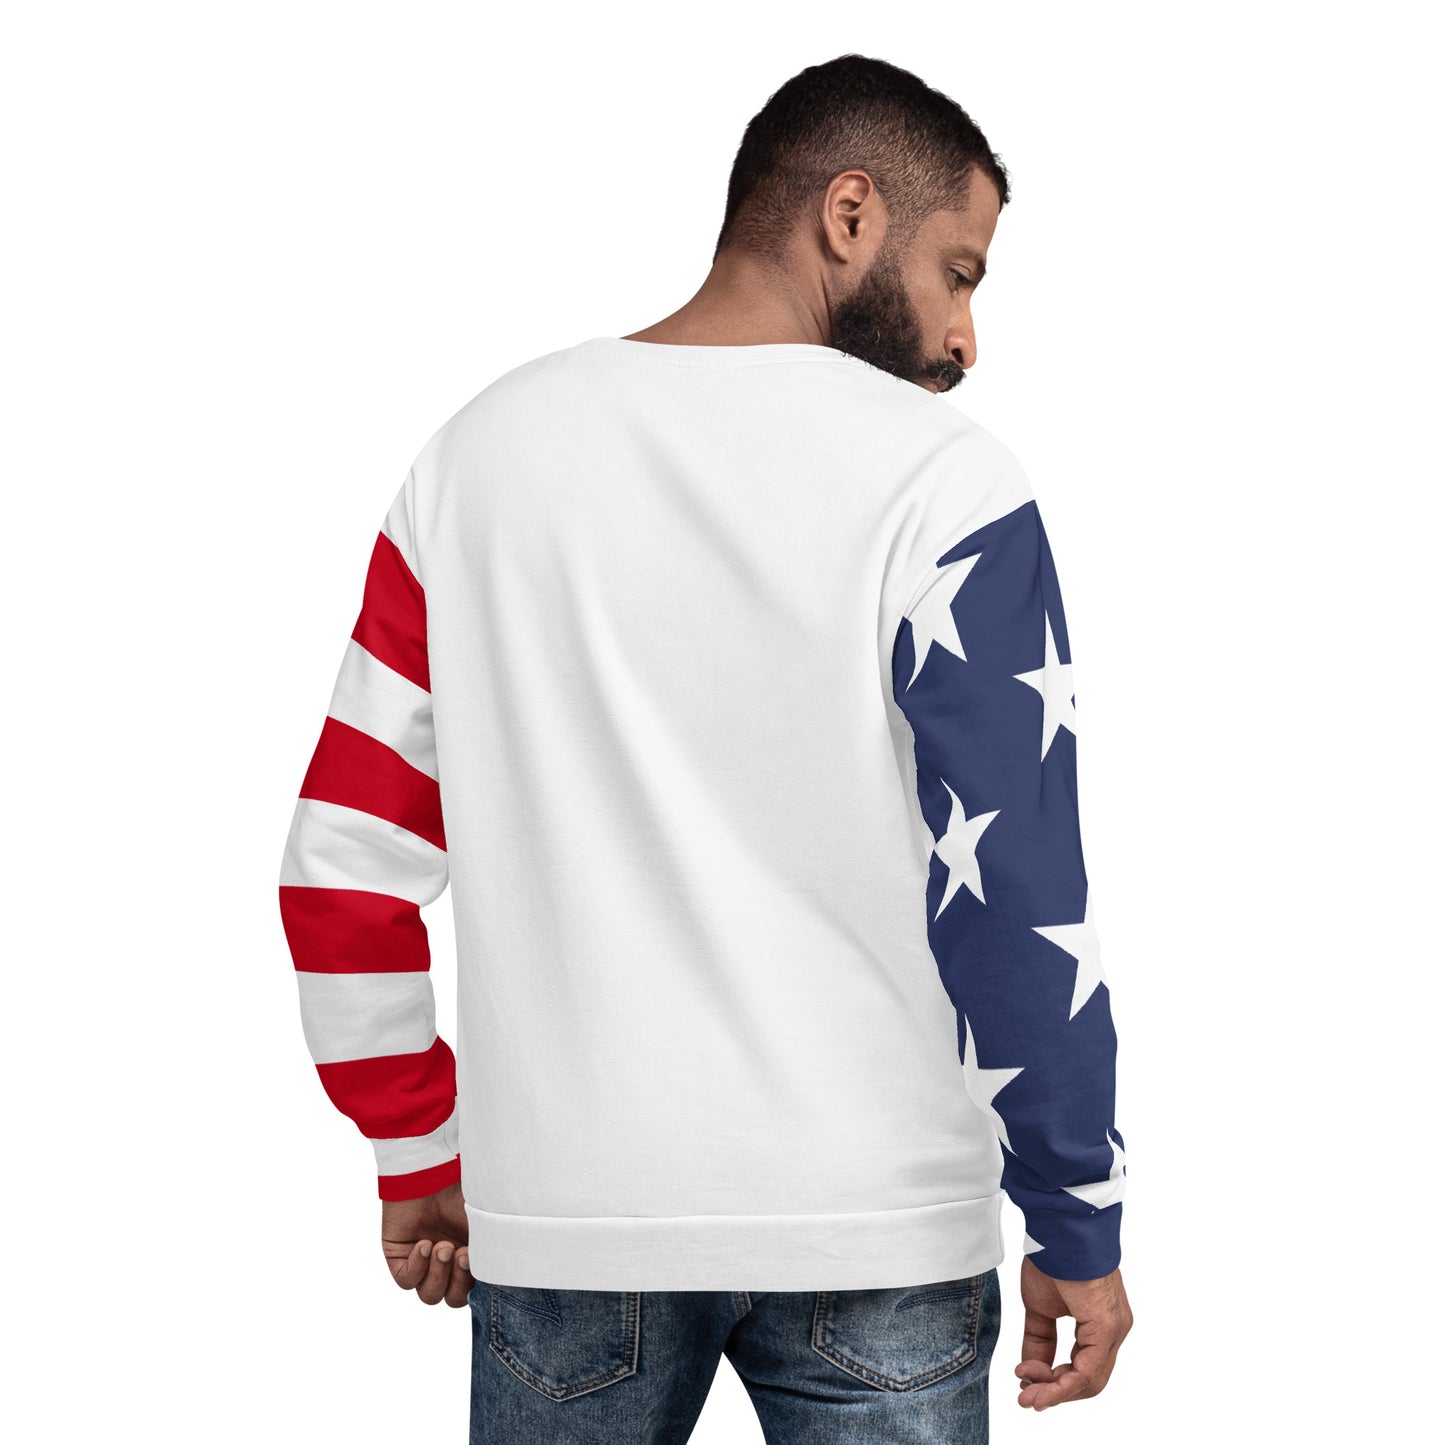 USA Flag Print Sweatshirt